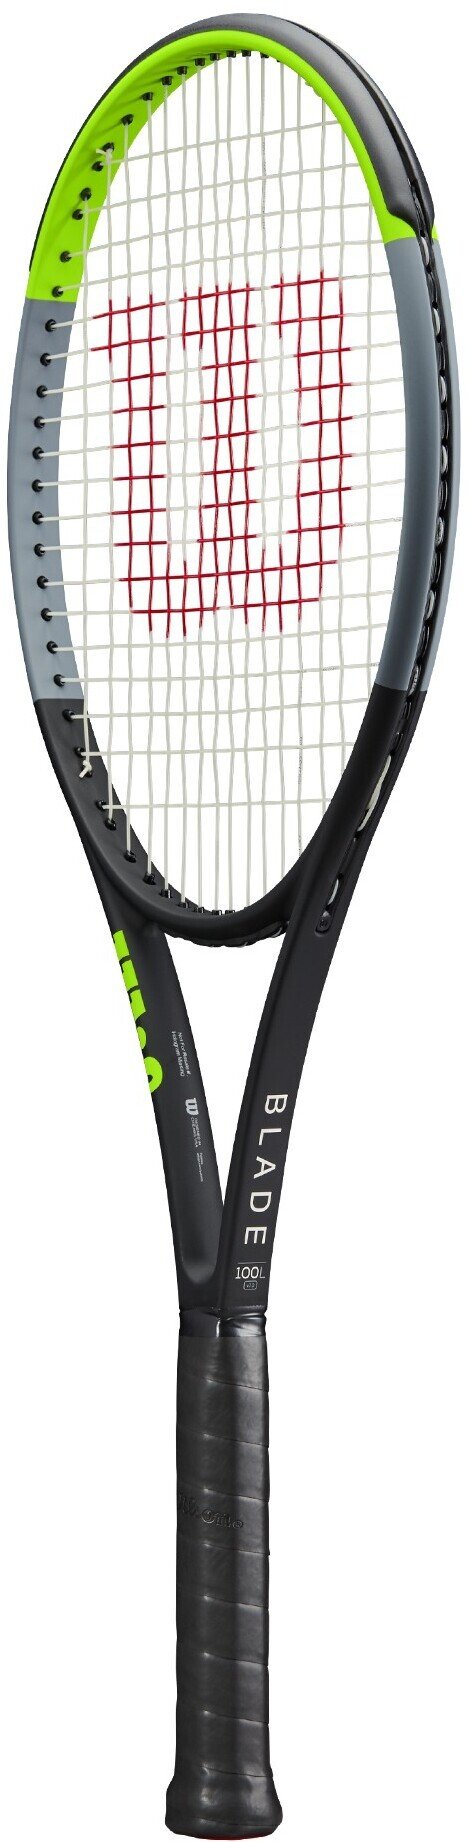 Wilson Blade 100L V7.0 Tennis Racquet - Black/Green